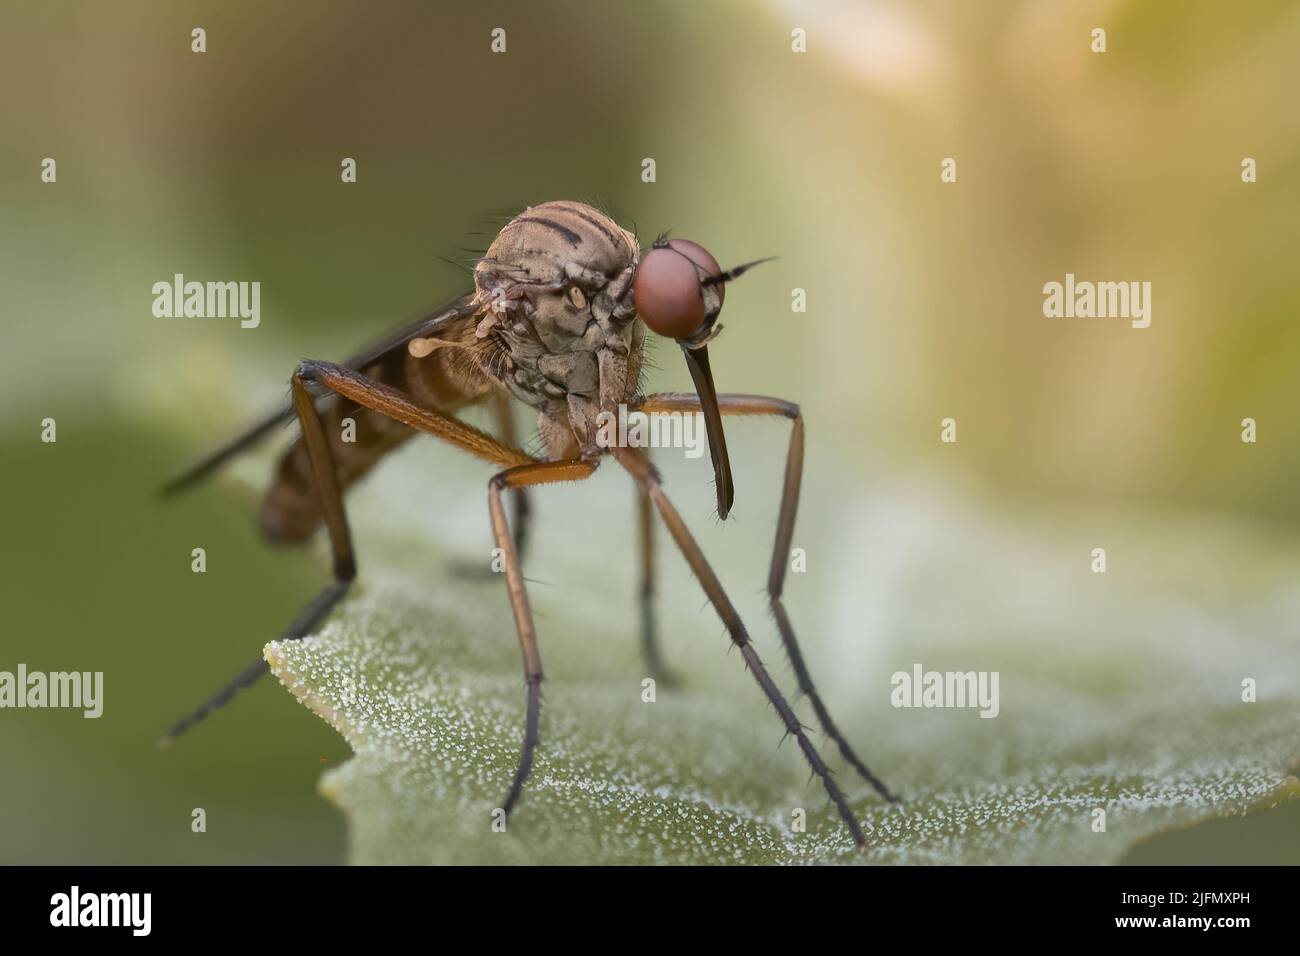 Syrphes dans le jardin, insectes pollinisateurs Stock Photo